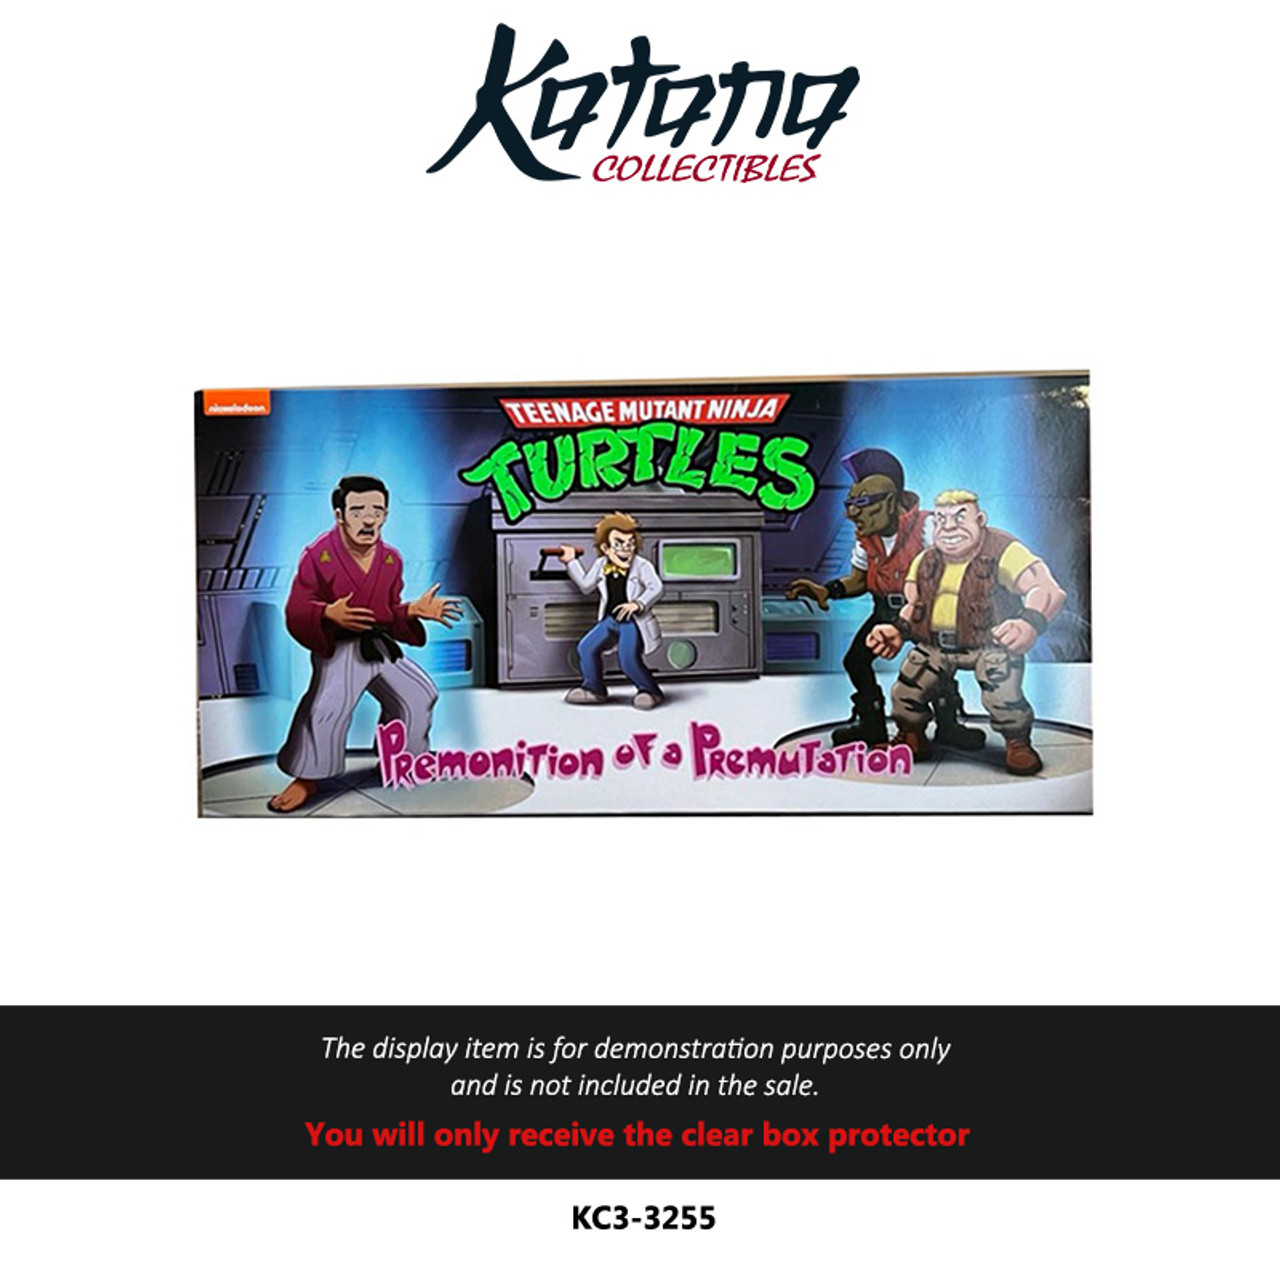 Katana Collectibles Protector For Teenage Mutant Ninja Turtles Premonition of a Premutation 4-Pack Figures